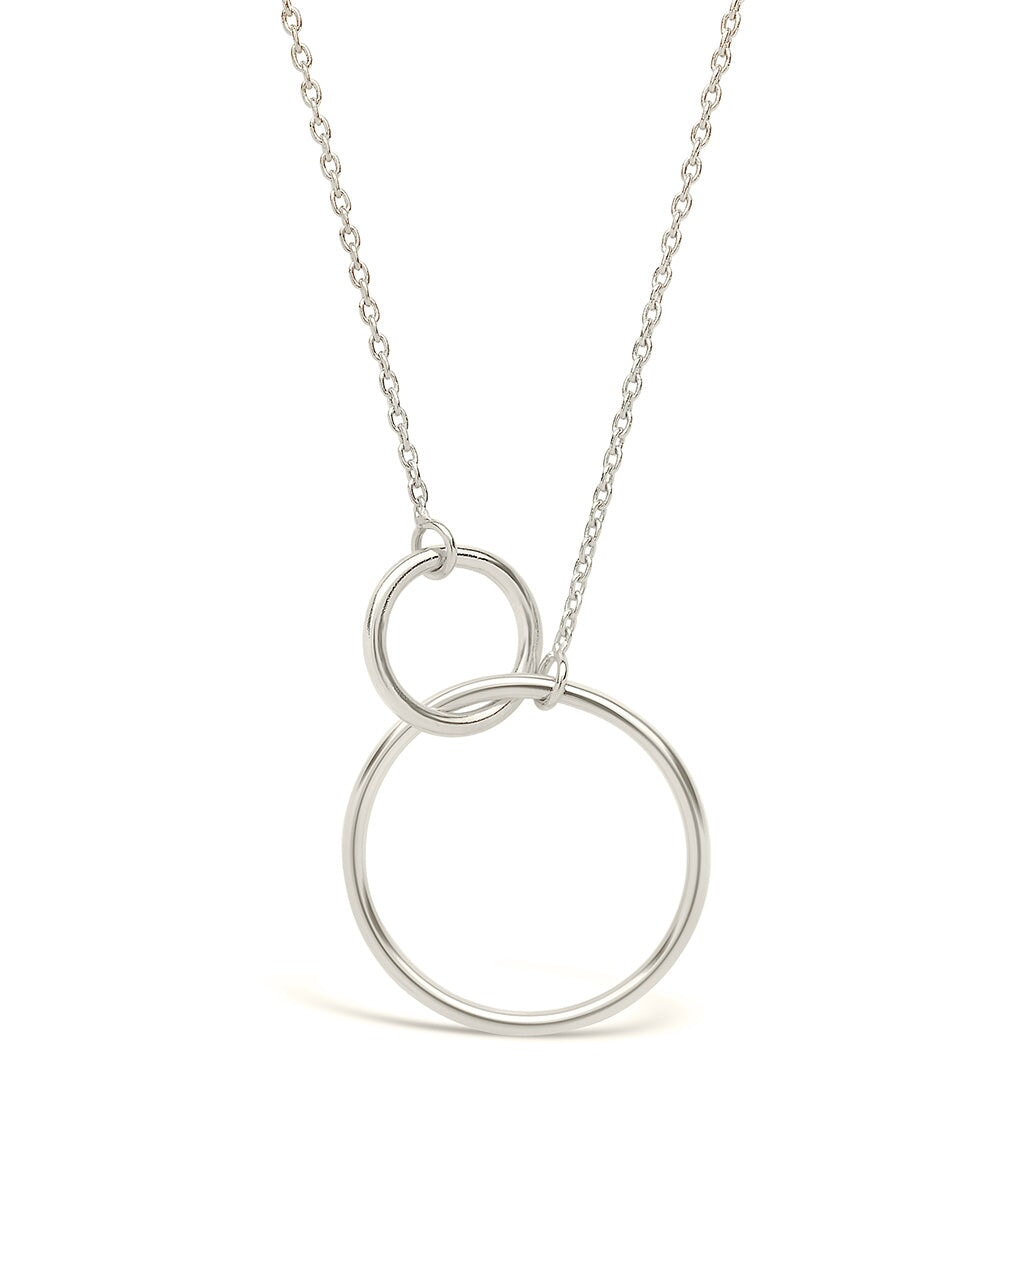 Interlocking Circles Necklace in 10K White Gold | Zales